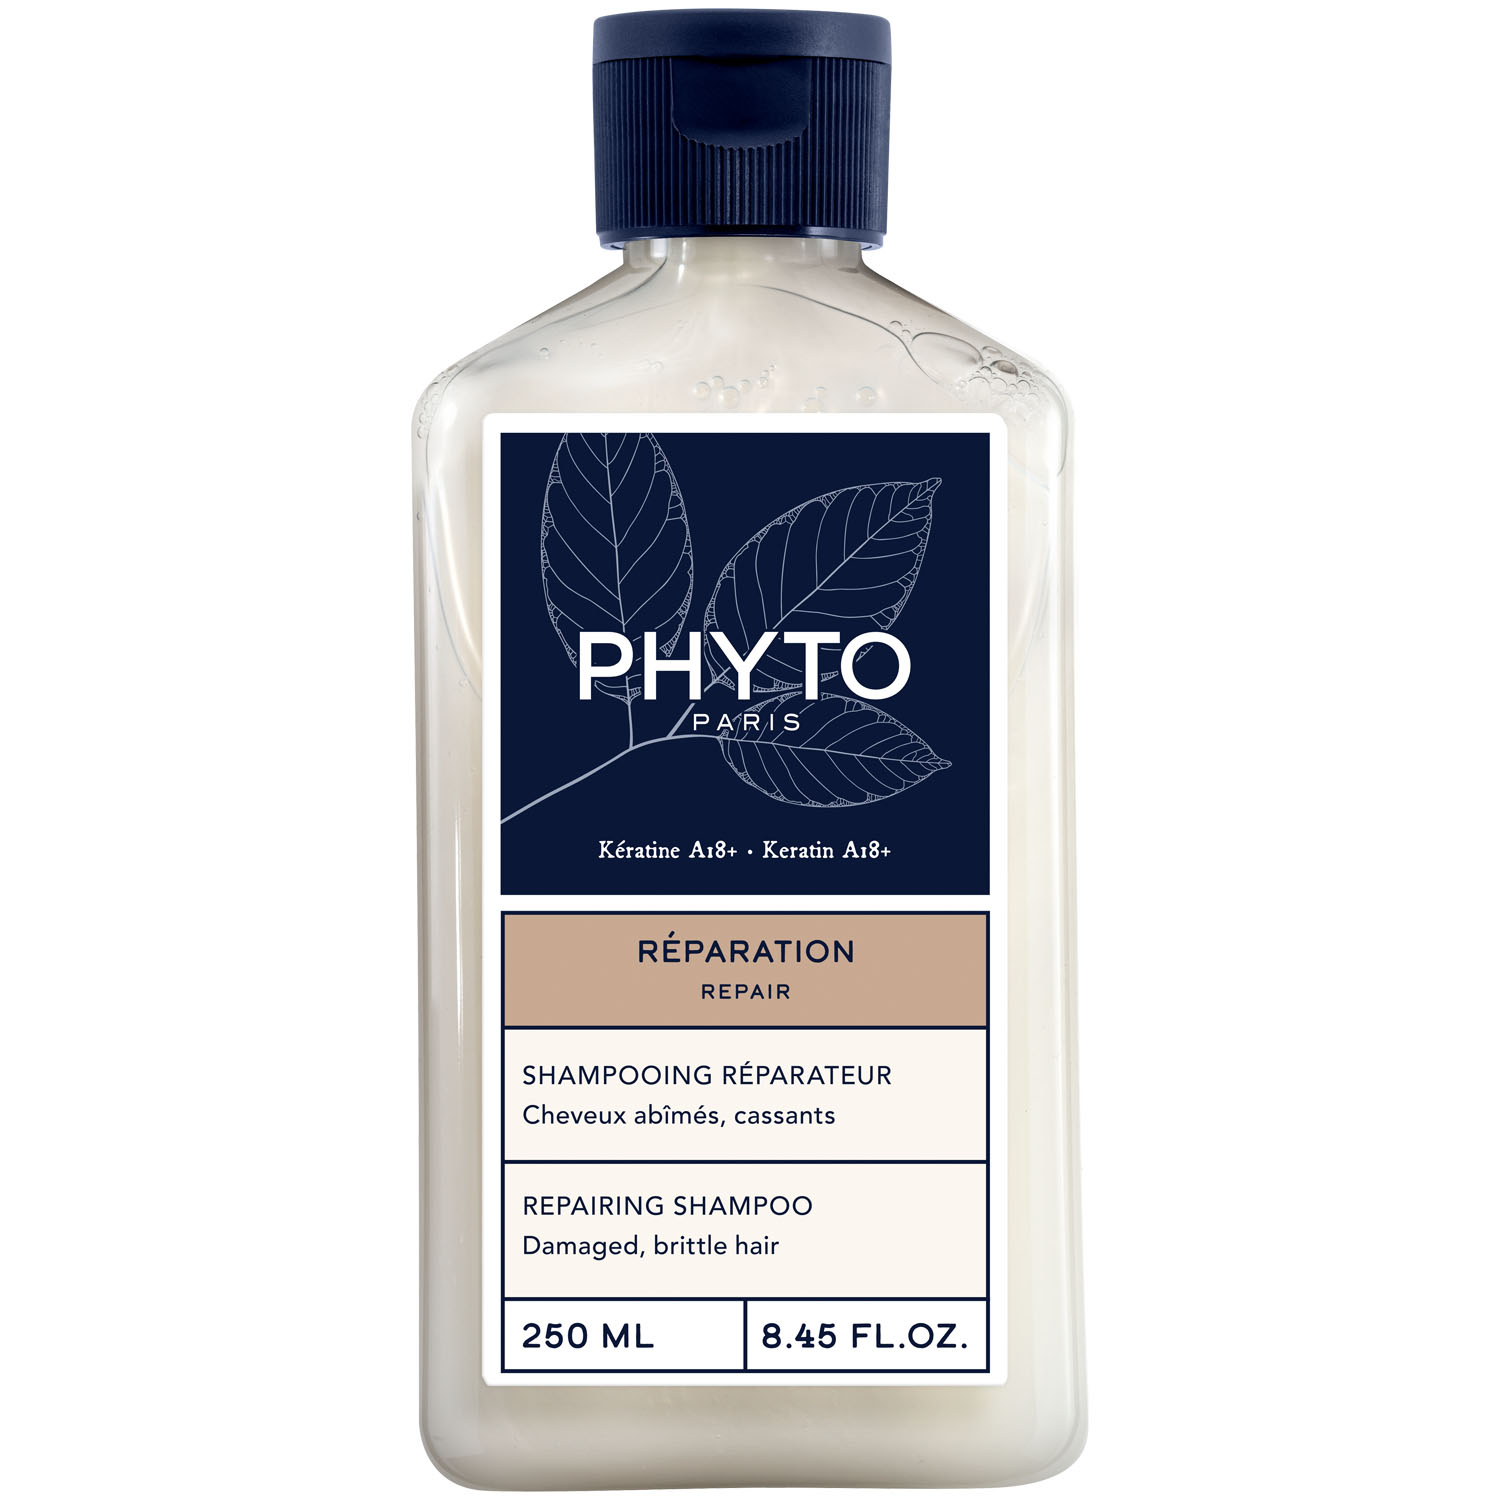 Phyto Восстанавливающий шампунь для волос, 250 мл (Phyto, Repair)